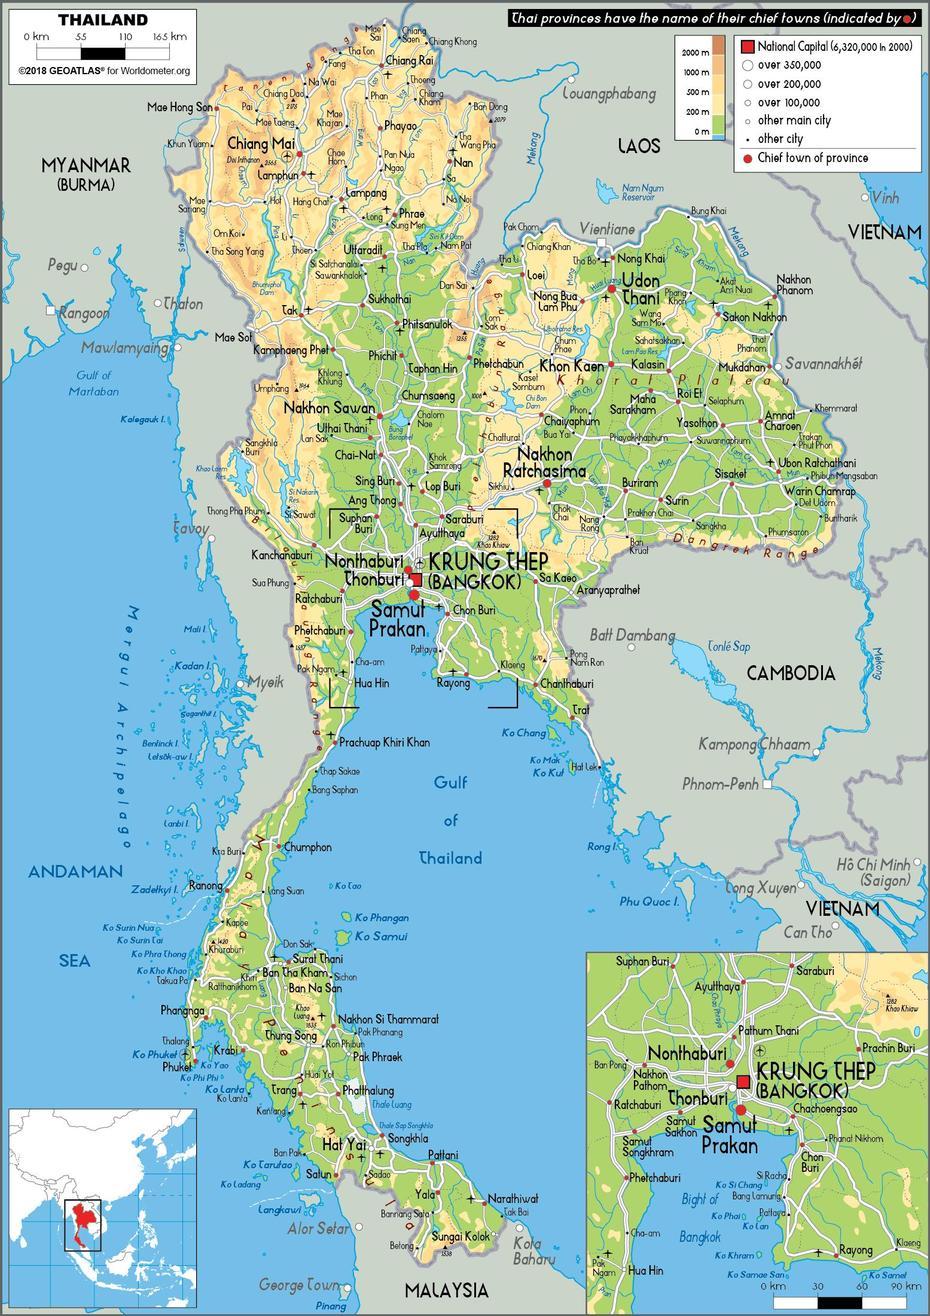 Ban Krut Thailand, Chiang Mai Thailand Pictures, Physical, Ban Ang Sila, Thailand